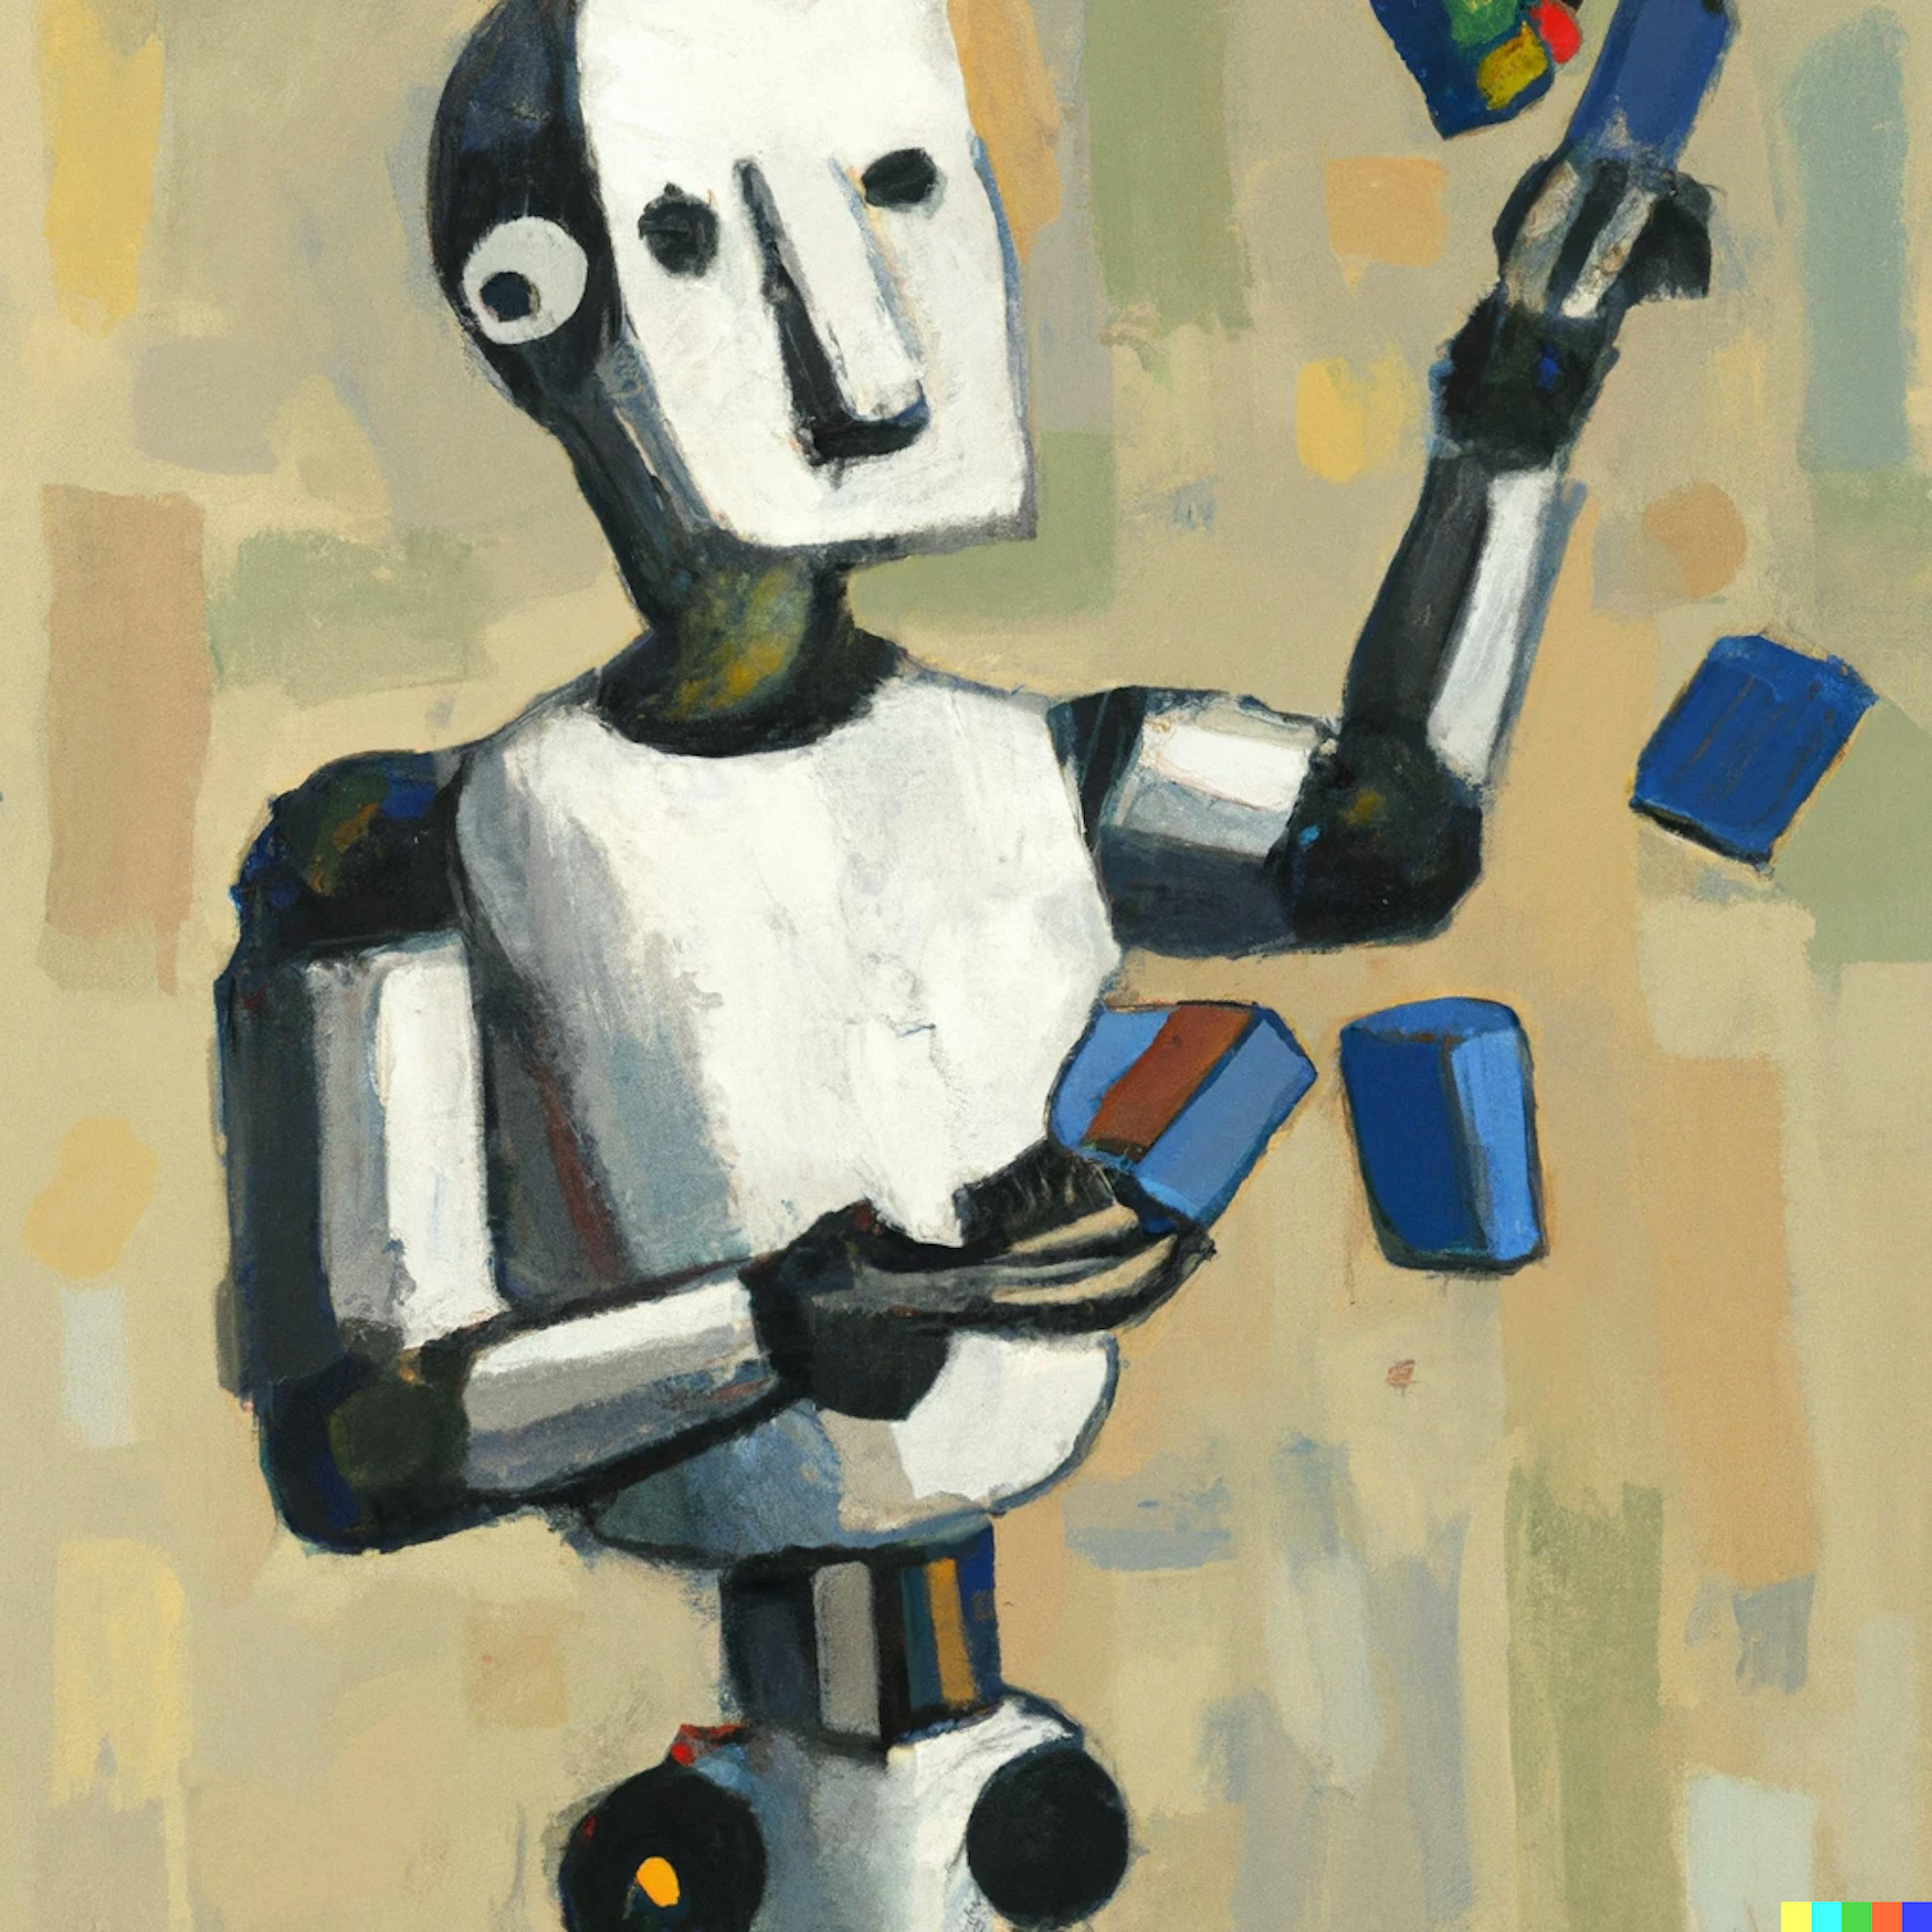 Robot juggling blocks